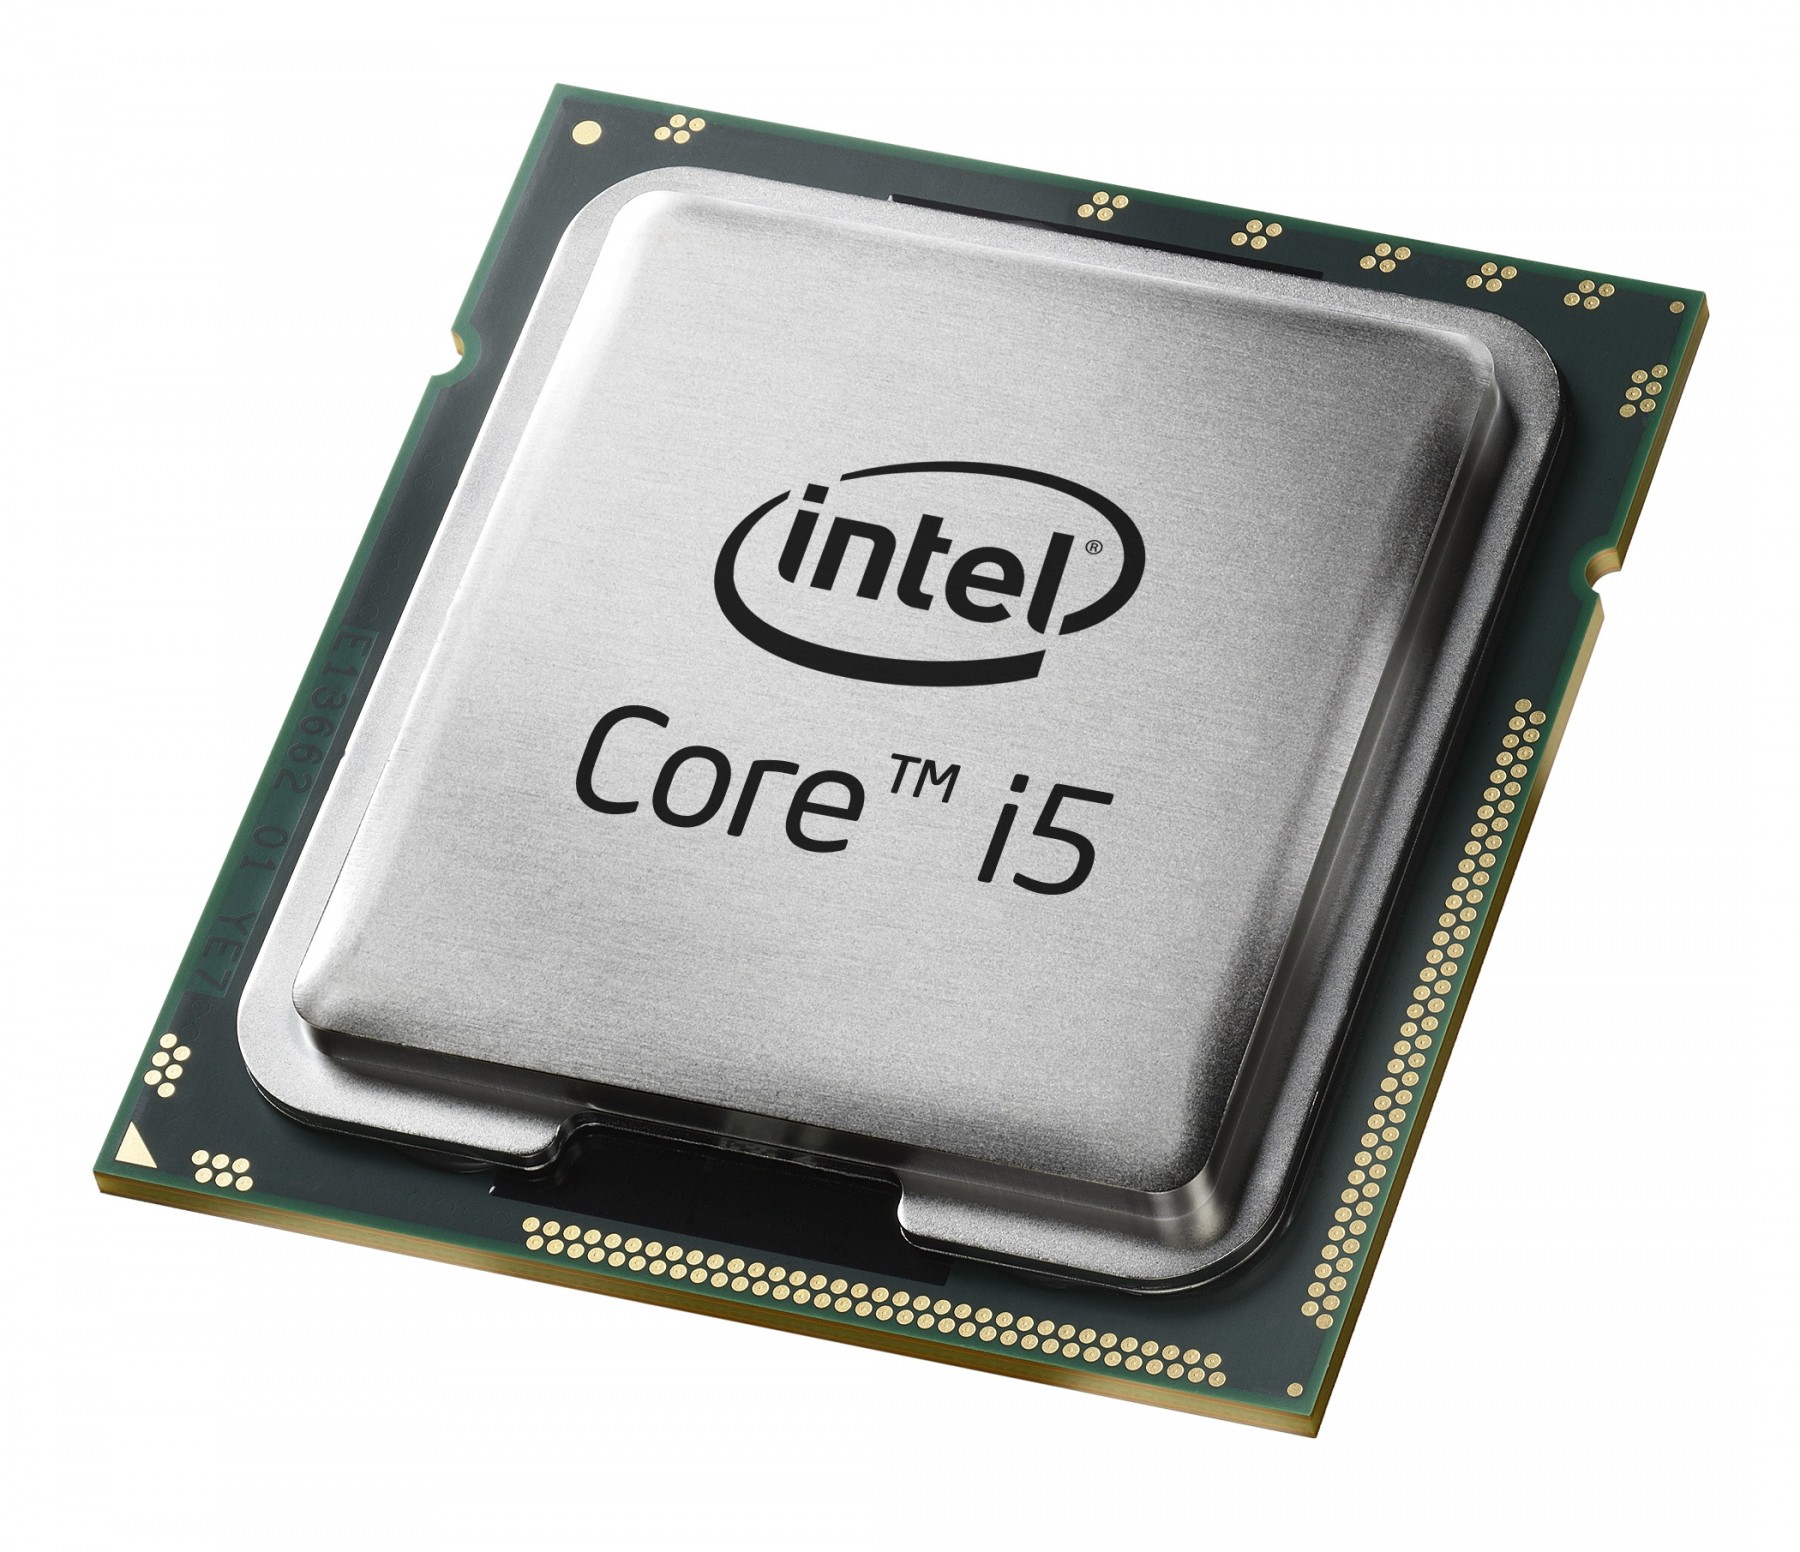 500030111-Intel Core i5-580M SLC28 2.67Ghz 2.5GT/s Socket G1 Processor-image